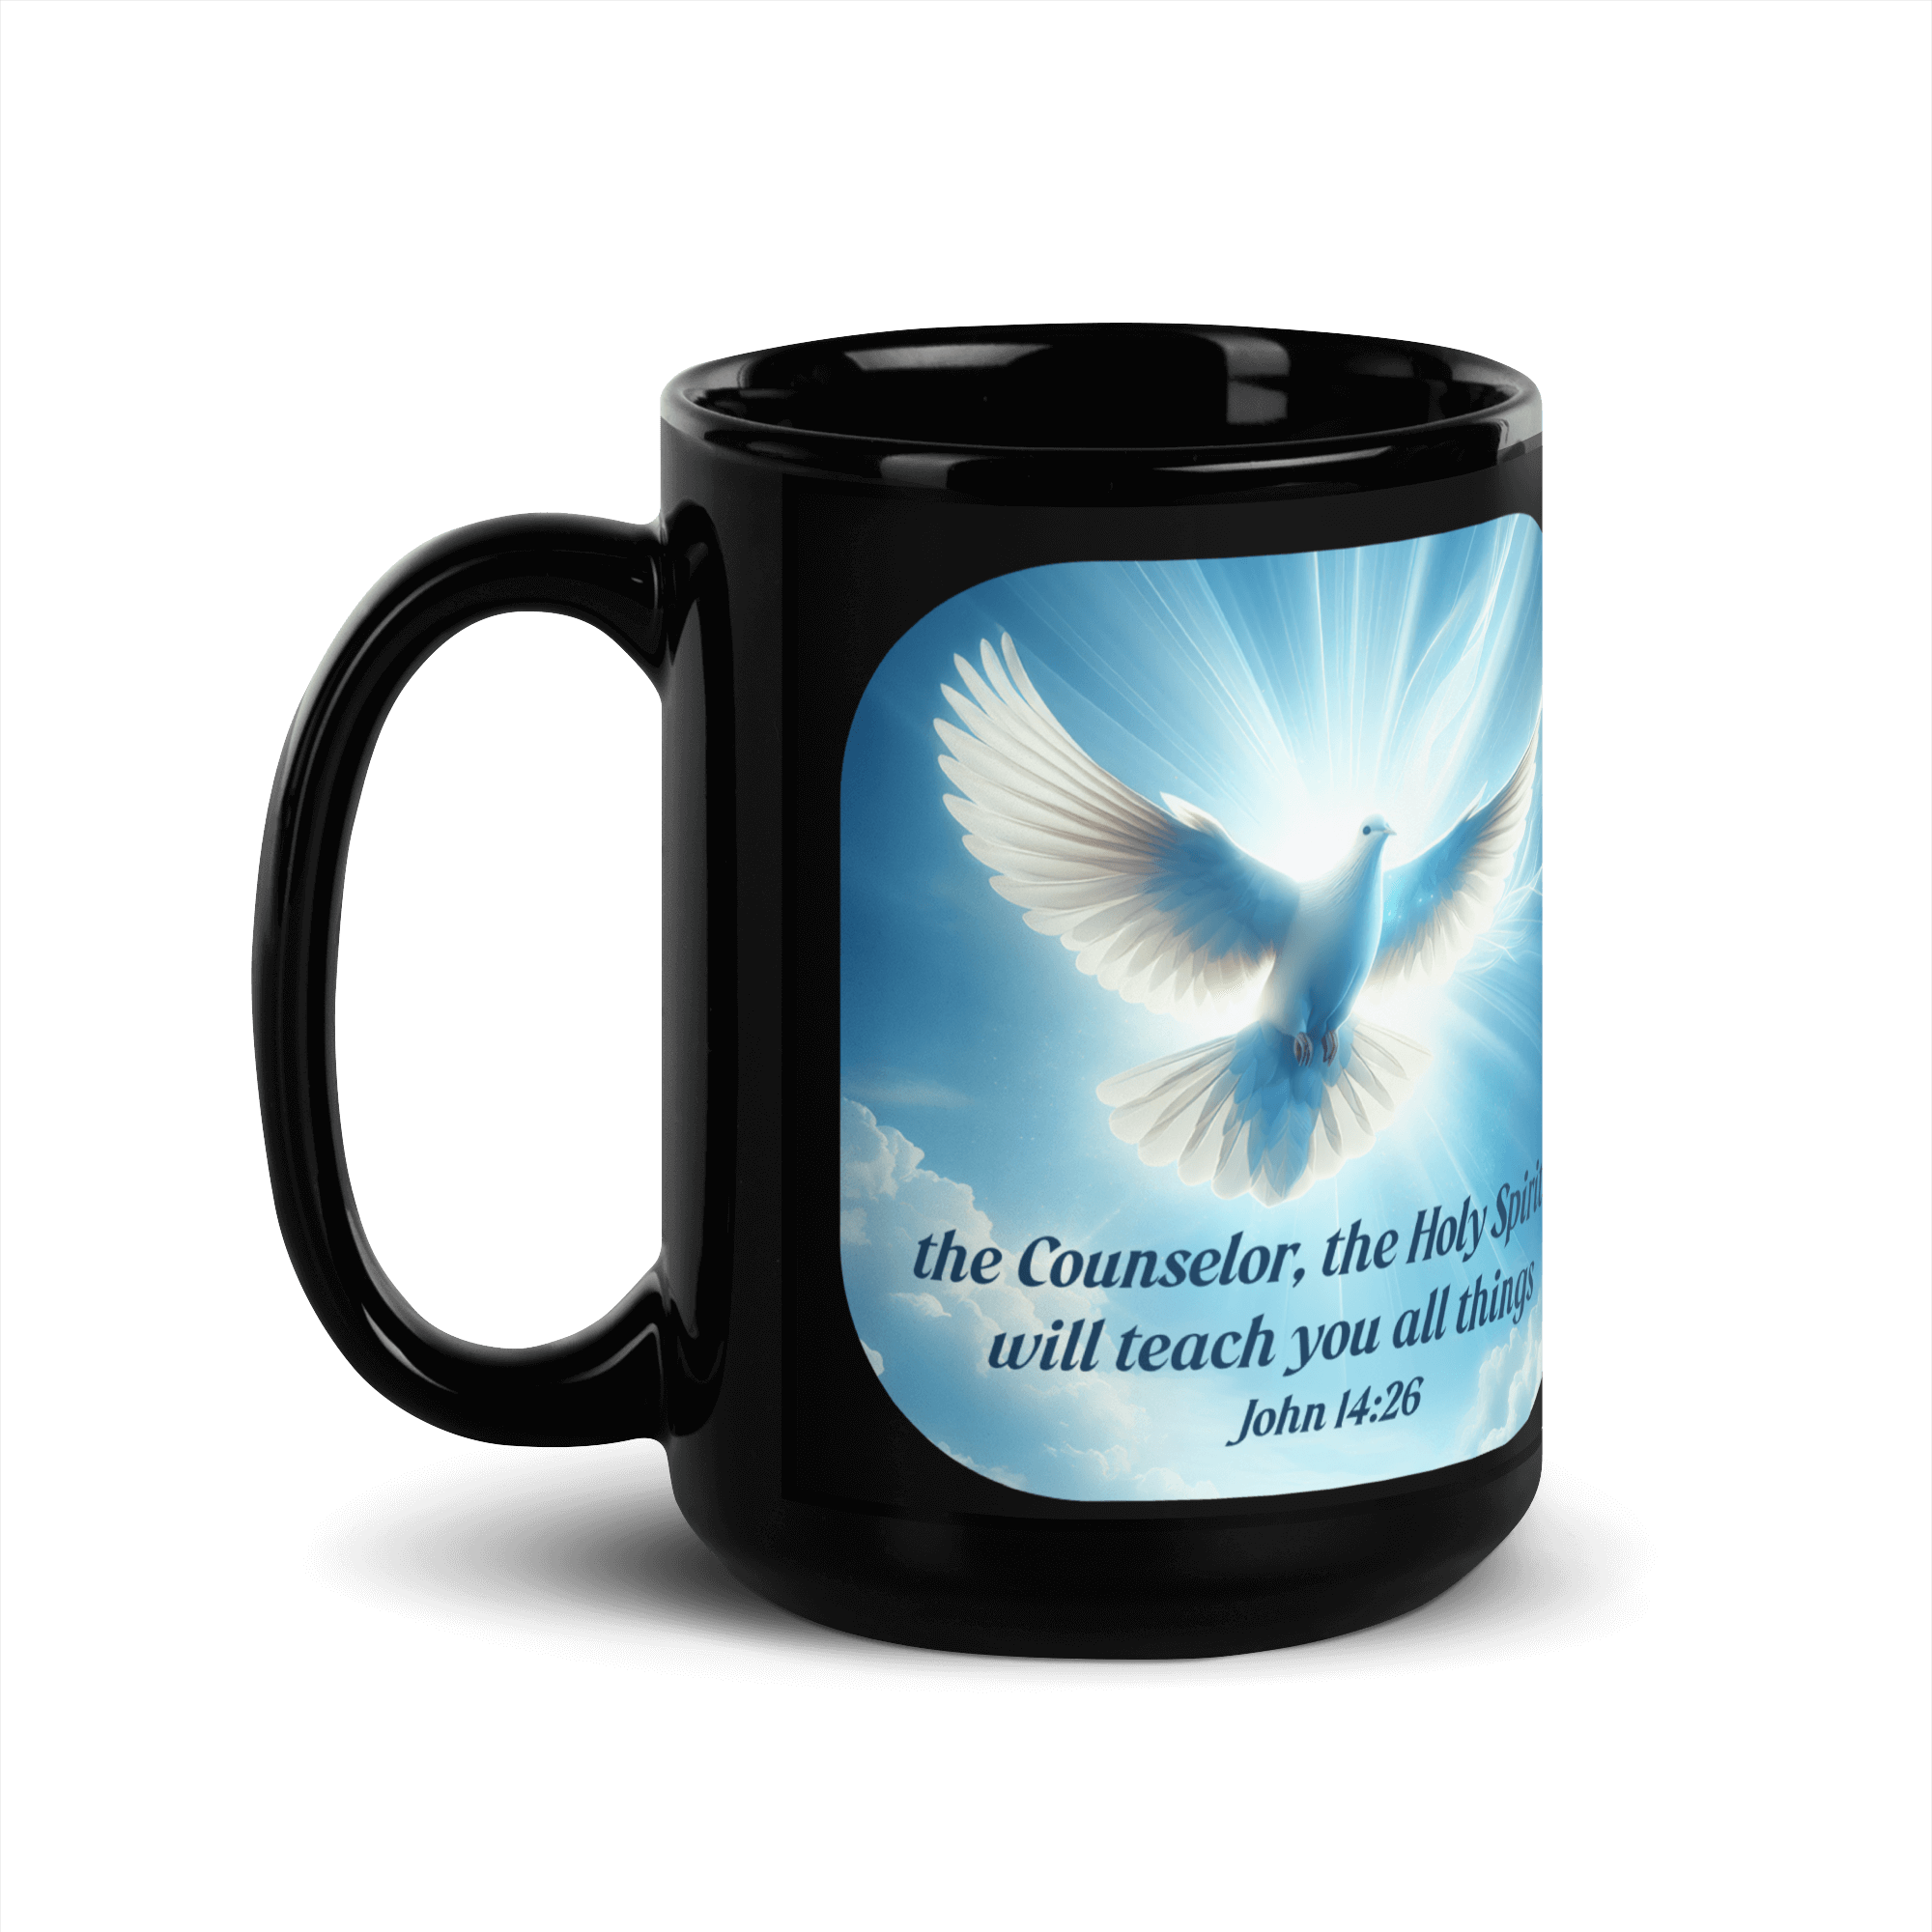 John 14:26 - Bible Verse, Holy Spirit Dove Black Mug